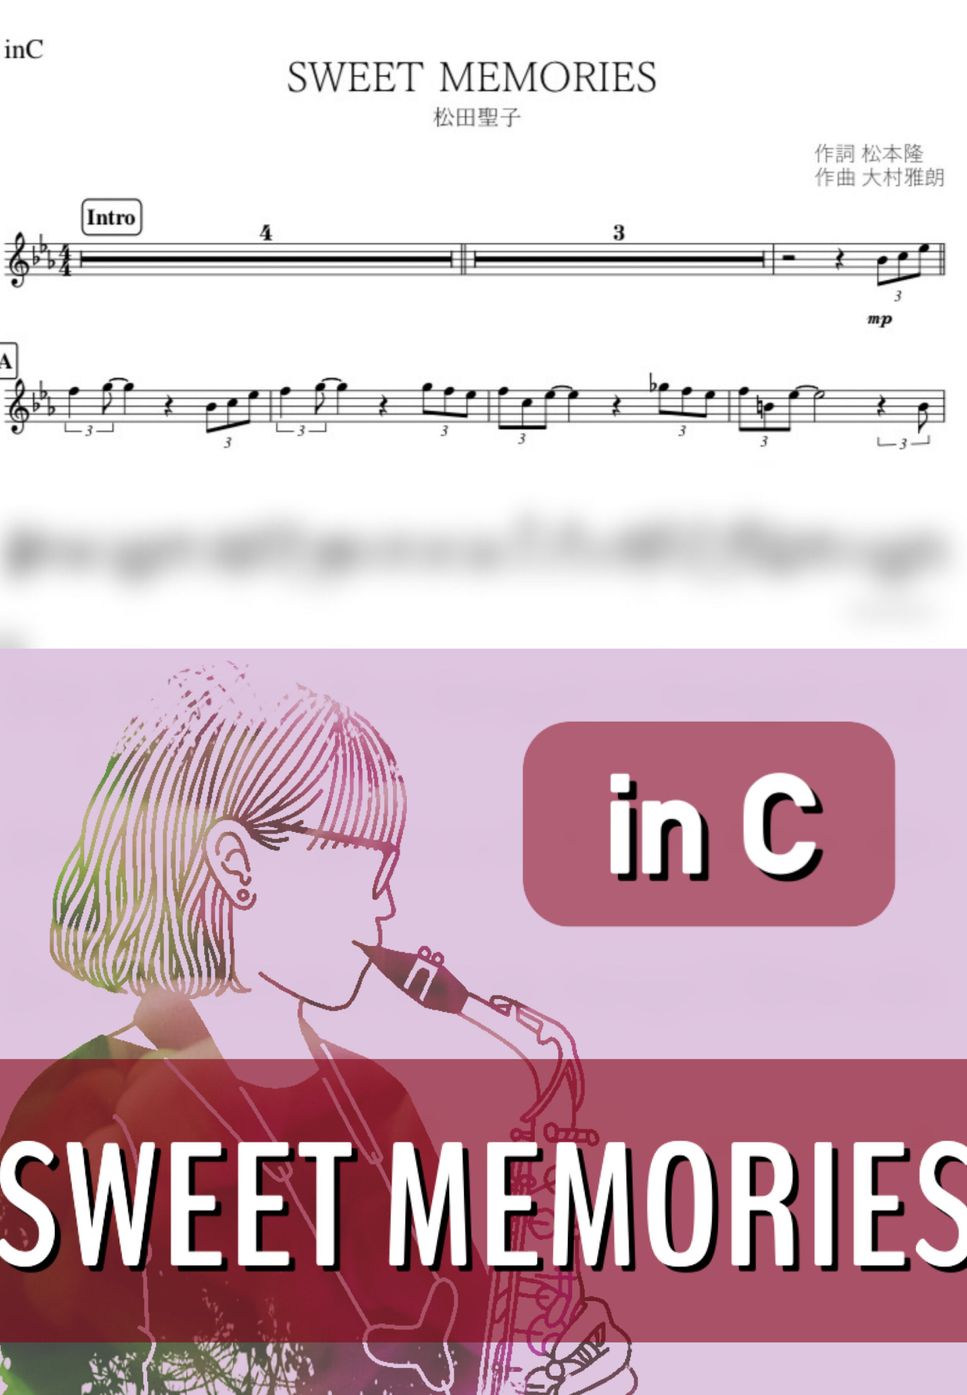 松田聖子 - SWEET MEMORIES (C) by kanamusic